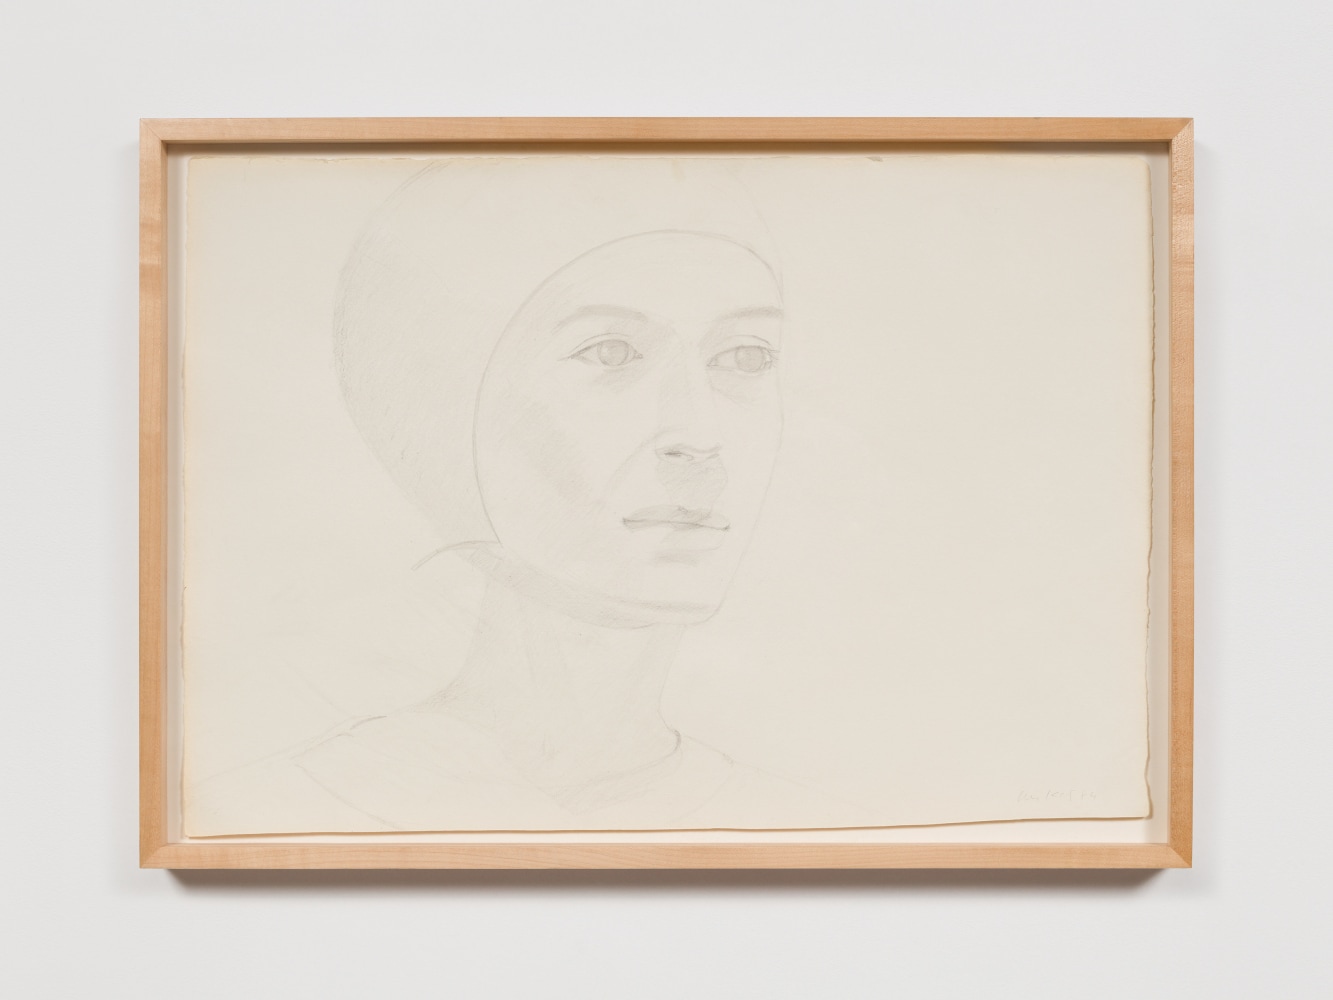 Alex Katz

Bathing Cap, 1984
pencil on paper
15 3/4 x 22 1/2 in. / 40 x 57.1 cm